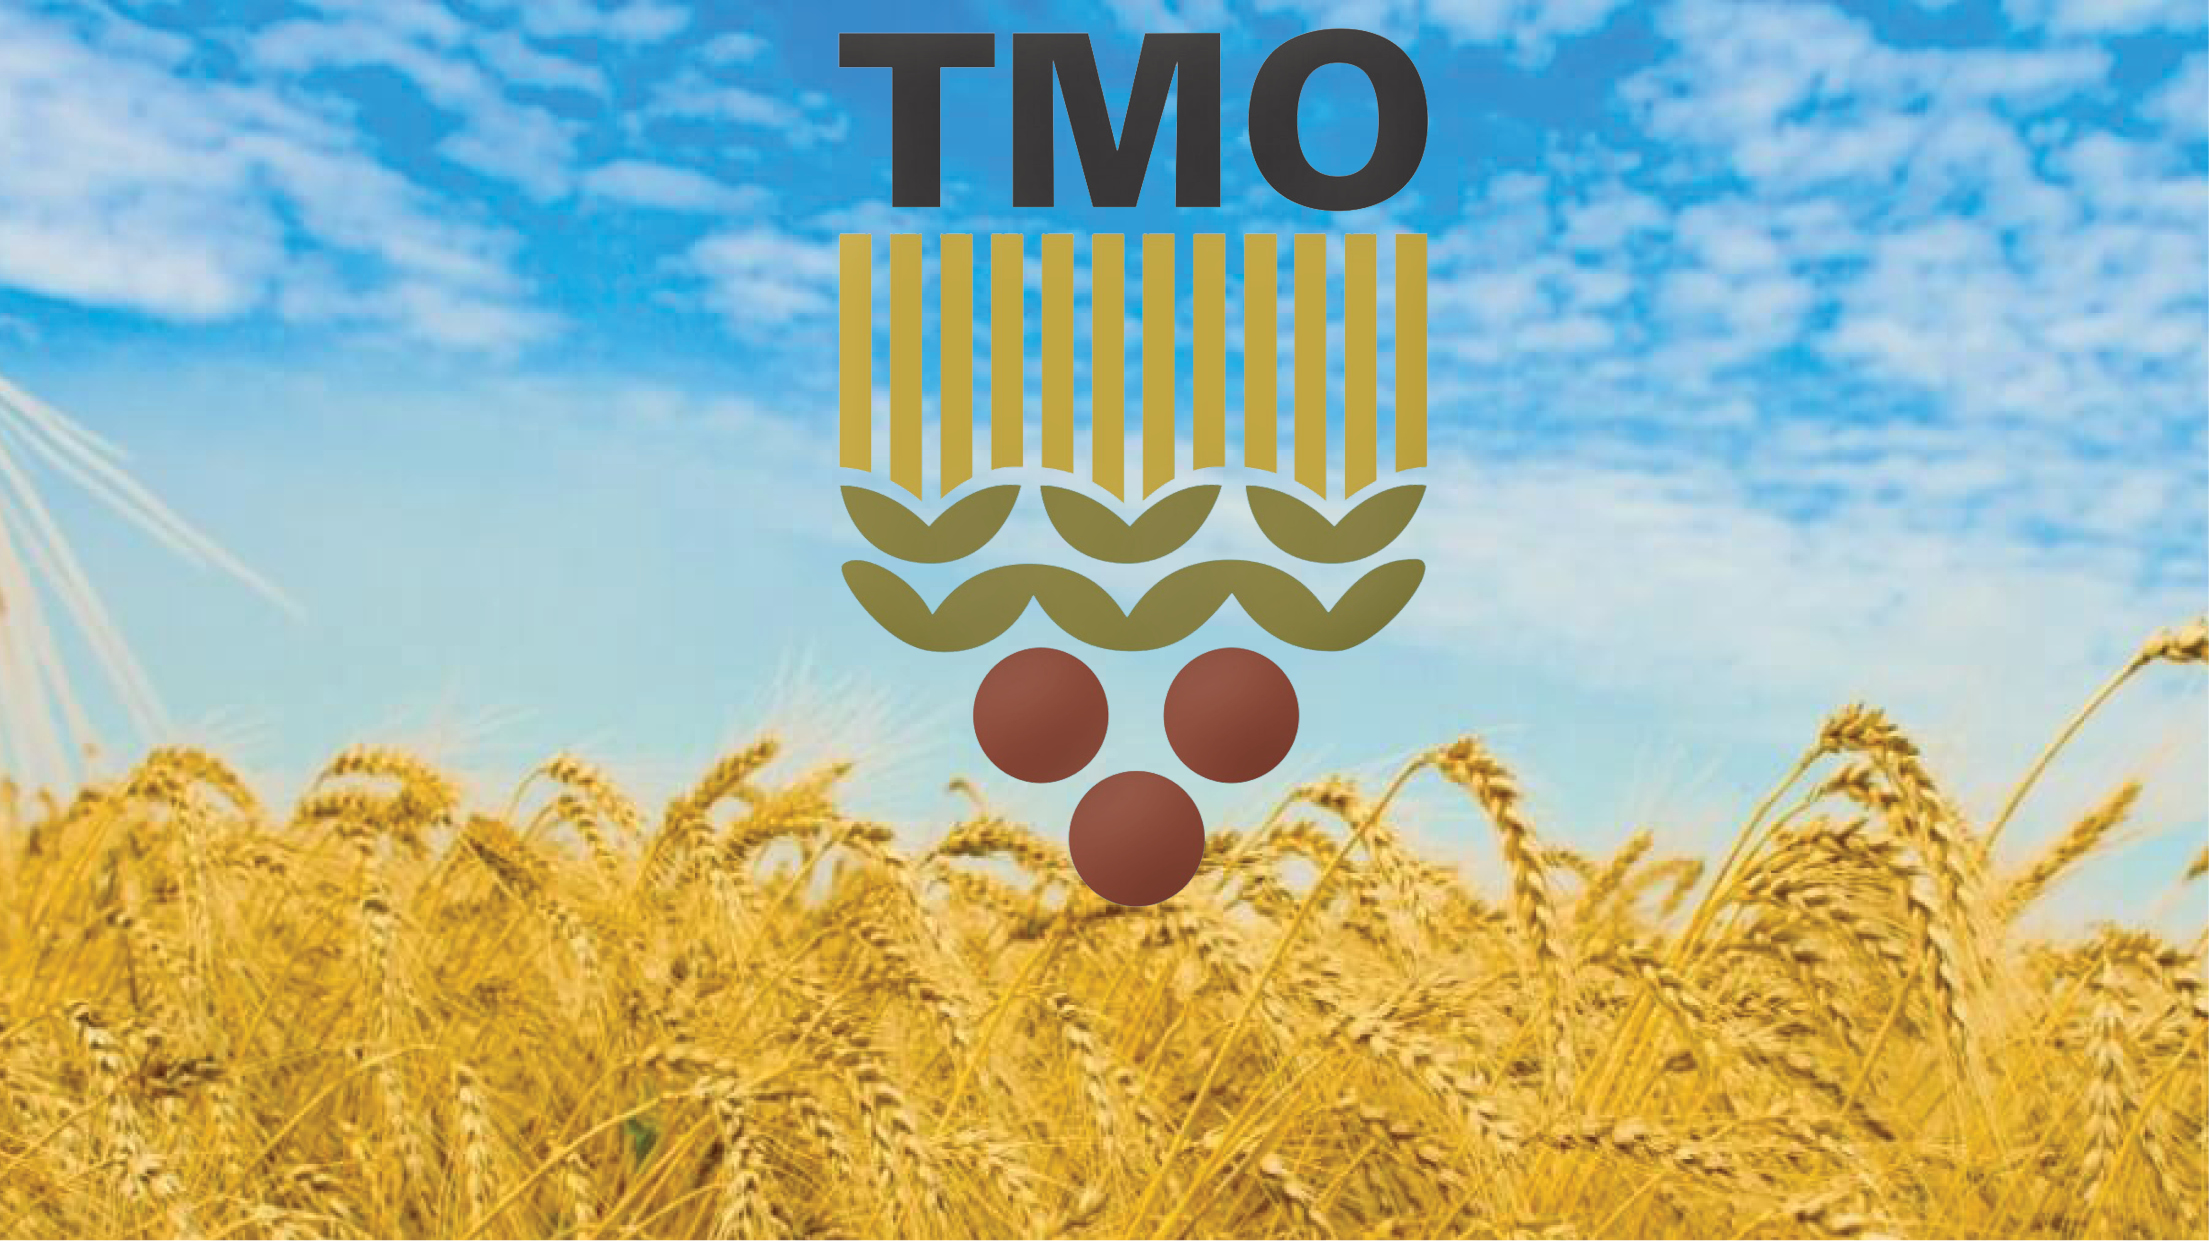 T me holding tmo. TMO. TMO logo. TMO Superevents. MITIS TMO.